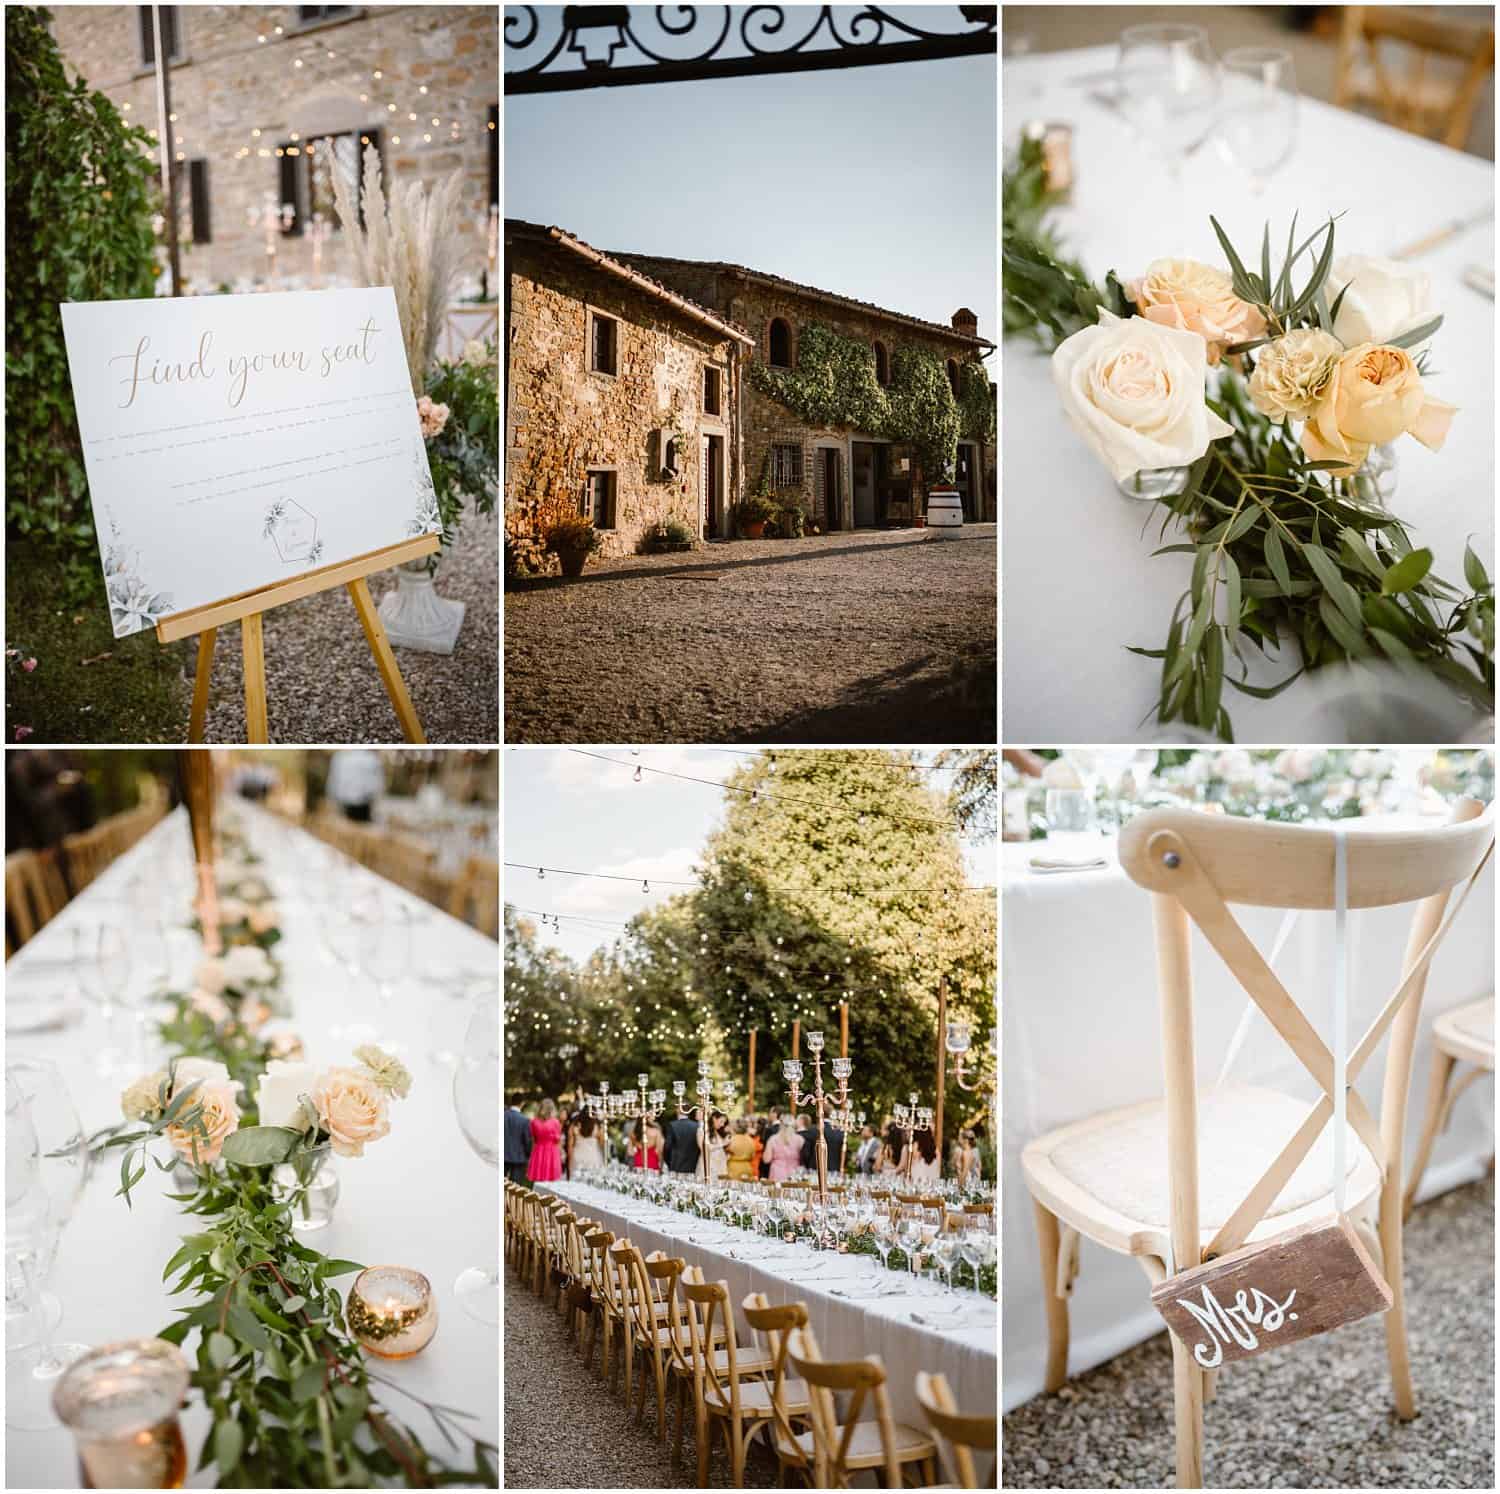 Wedding decor details at Borgo Castelvecchi in Tuscany, Chianti